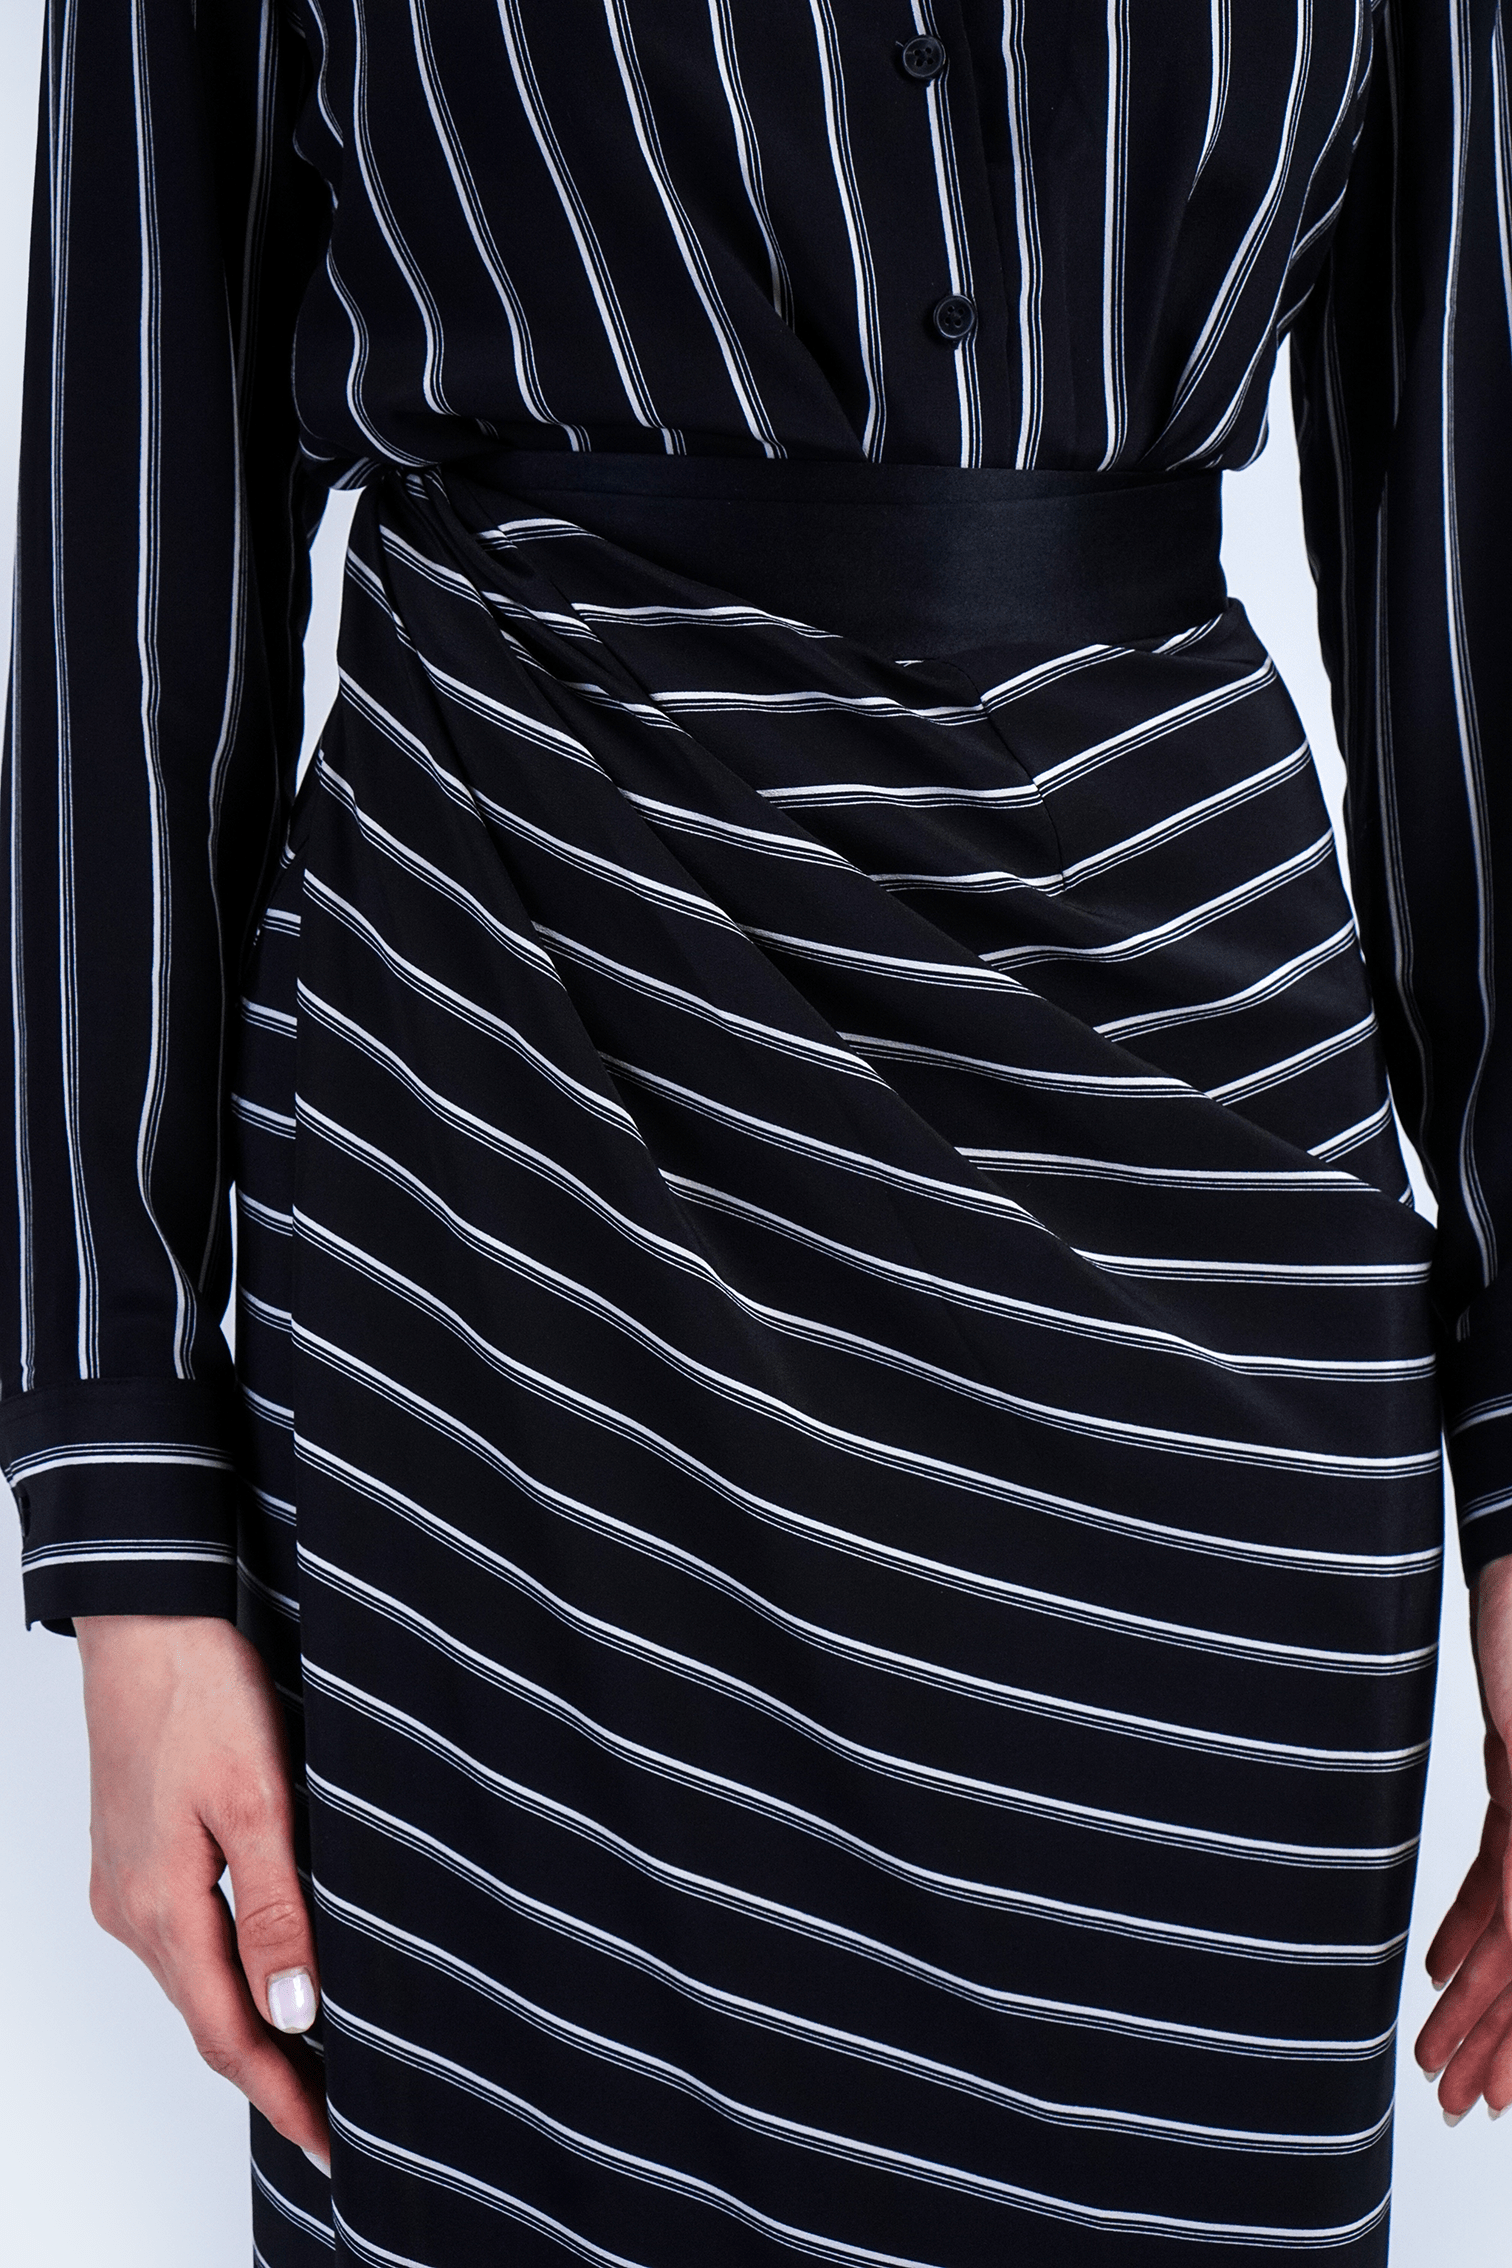 Chloe Dao SKIRTS Black Stripe Wrapped Long Trixie Skirt